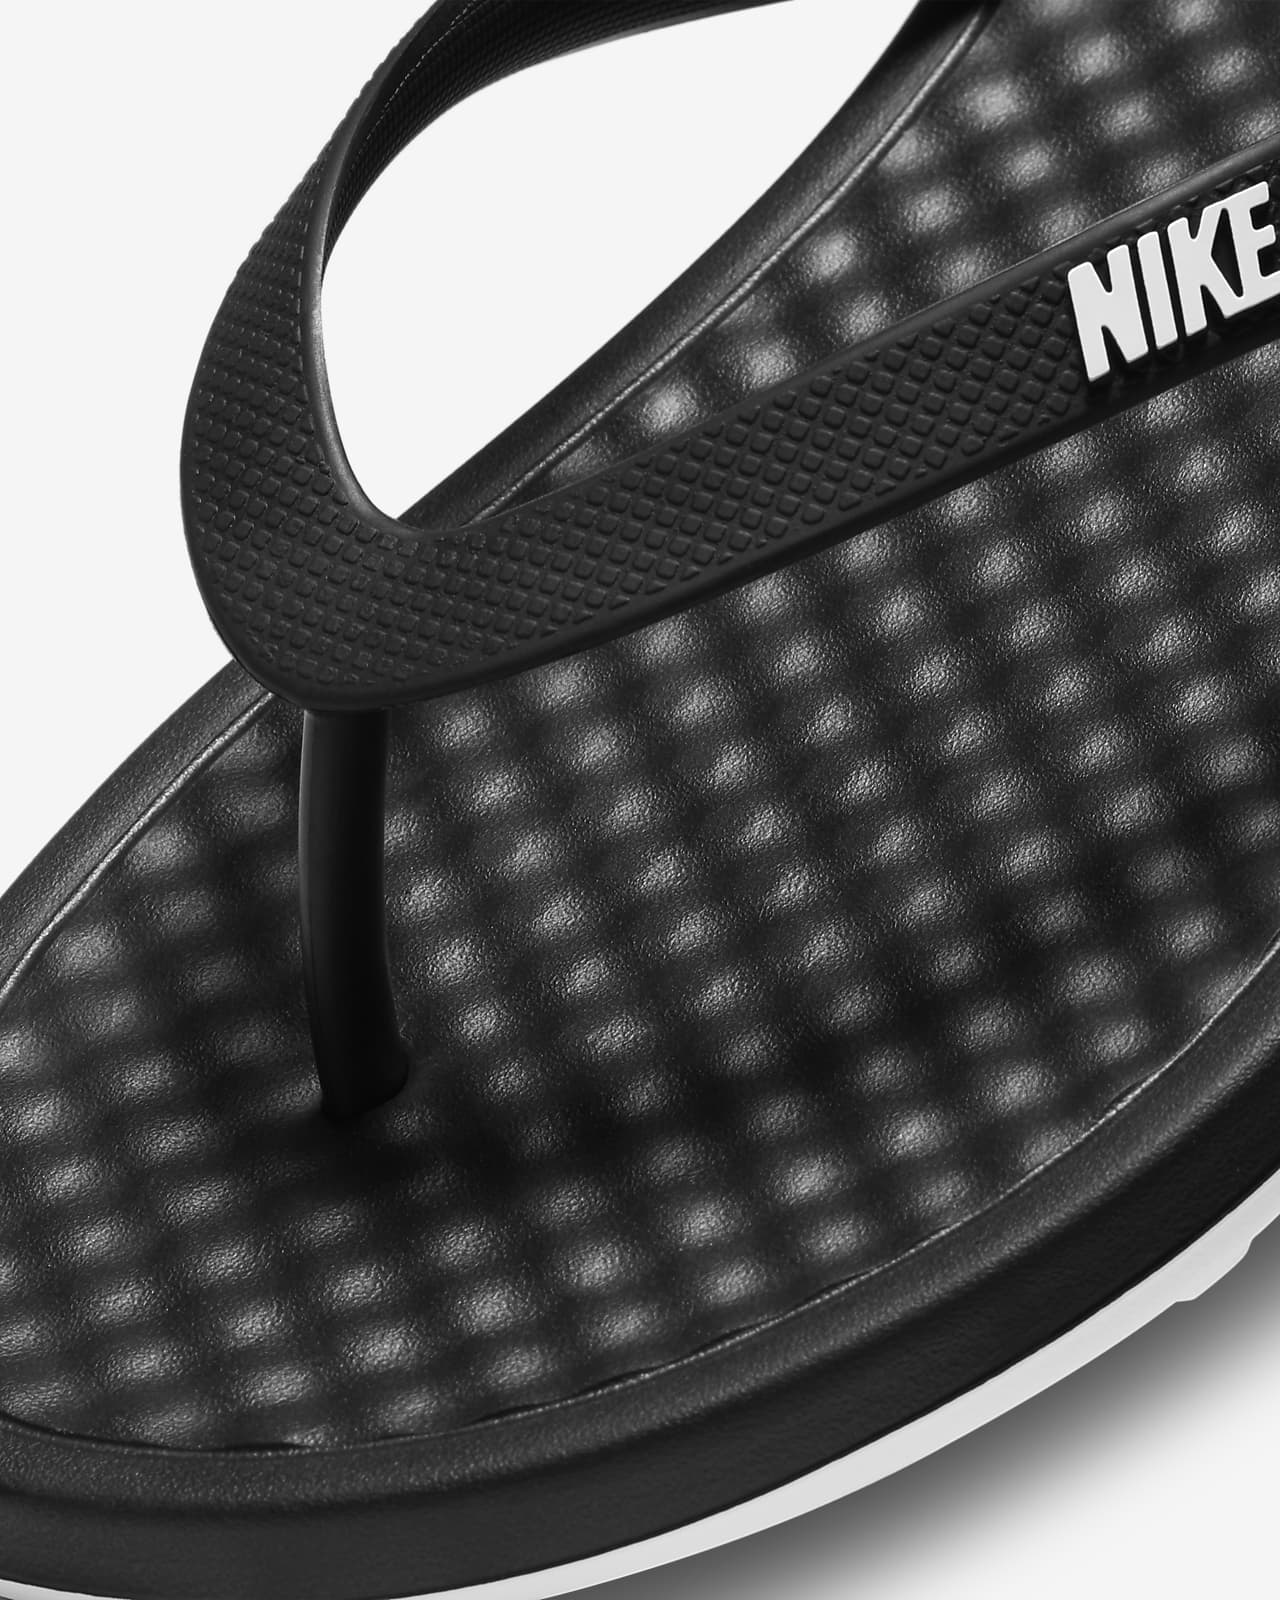 Nike Solay Flip Flop in Black